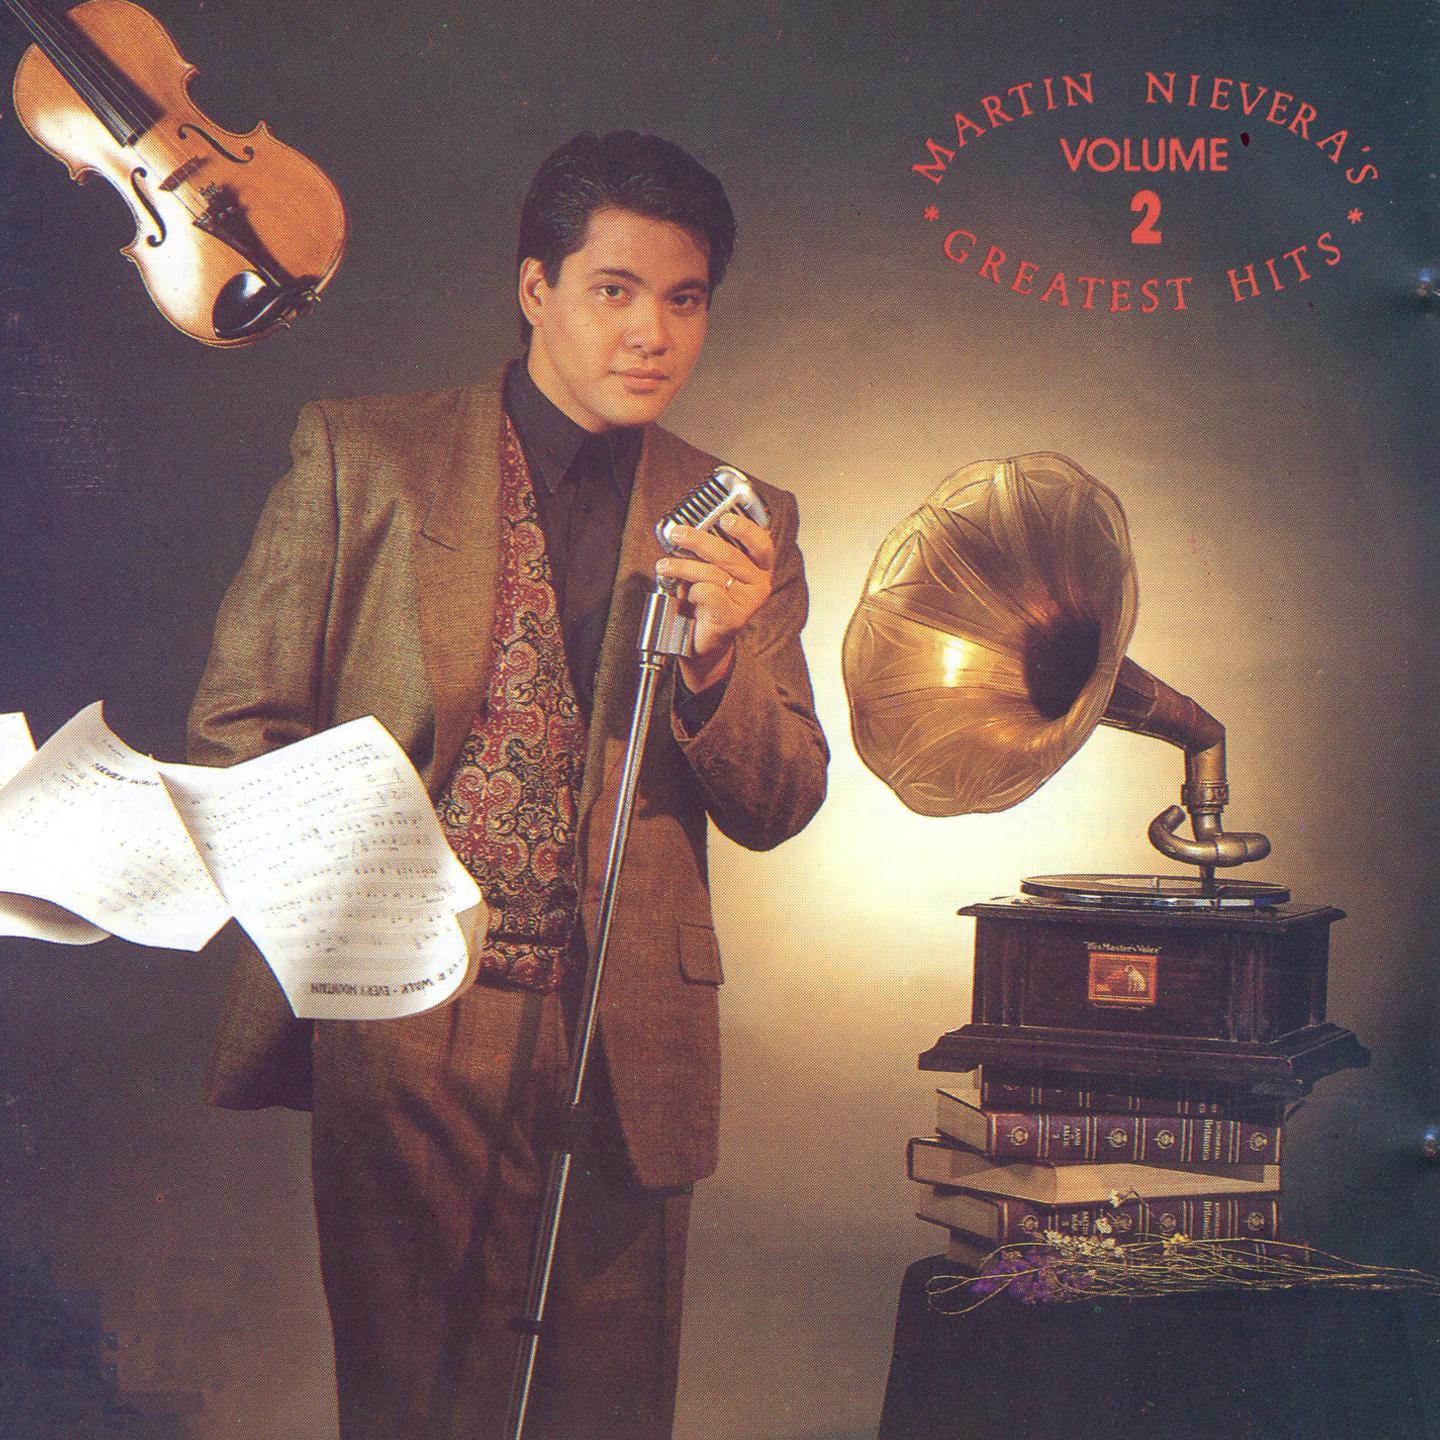 Martin Nievera's Greatest Hits, Vol. 2